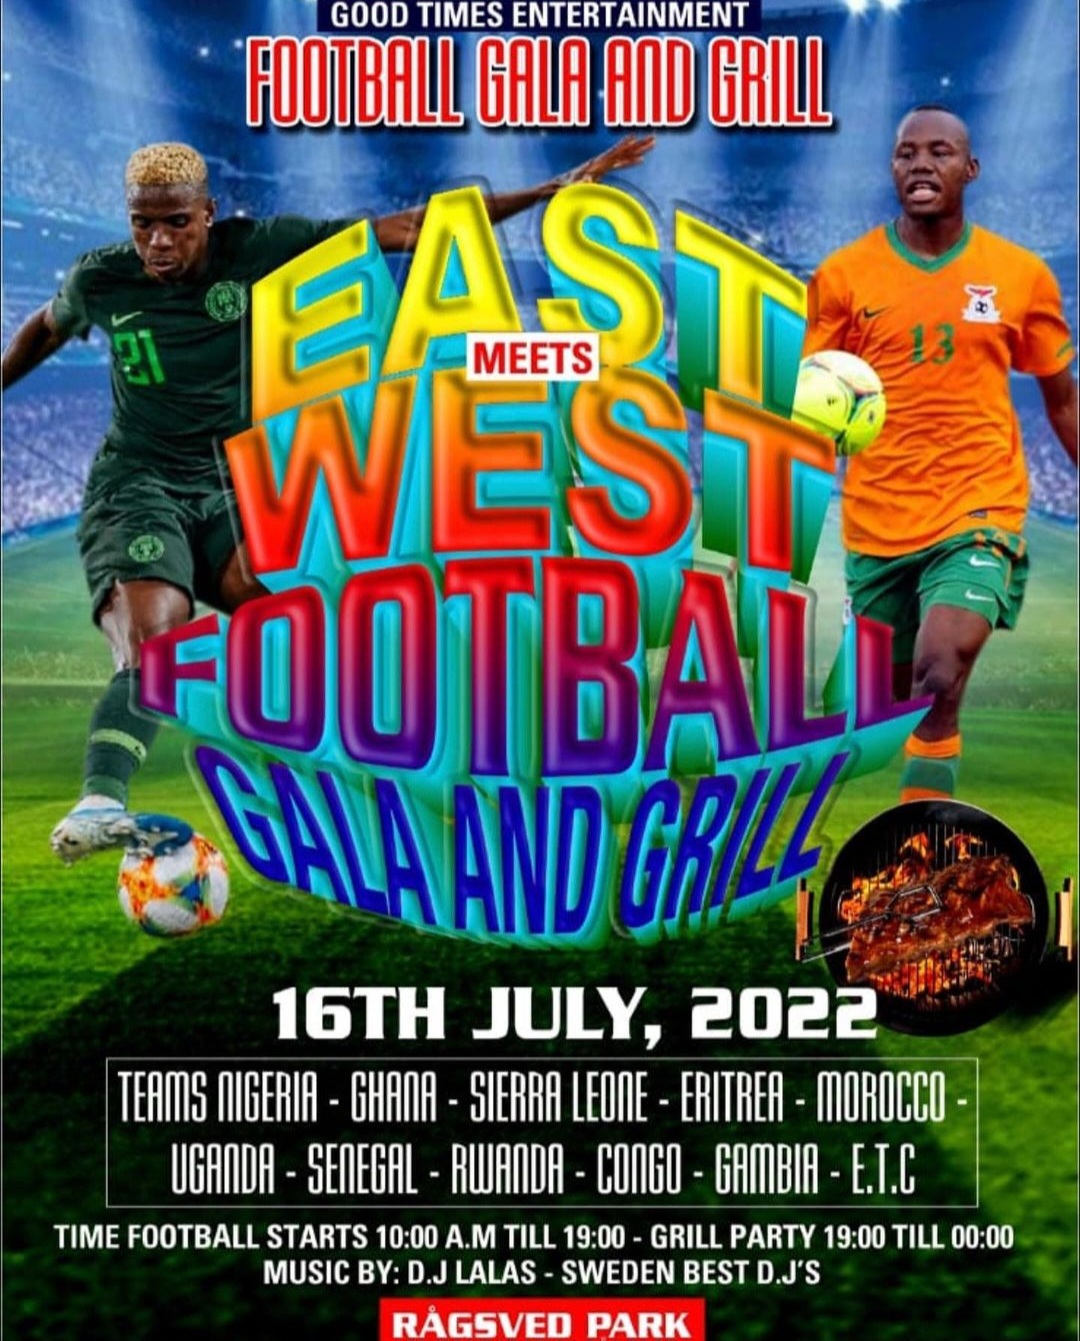 EVENEMANG! East meets West football gala grill!